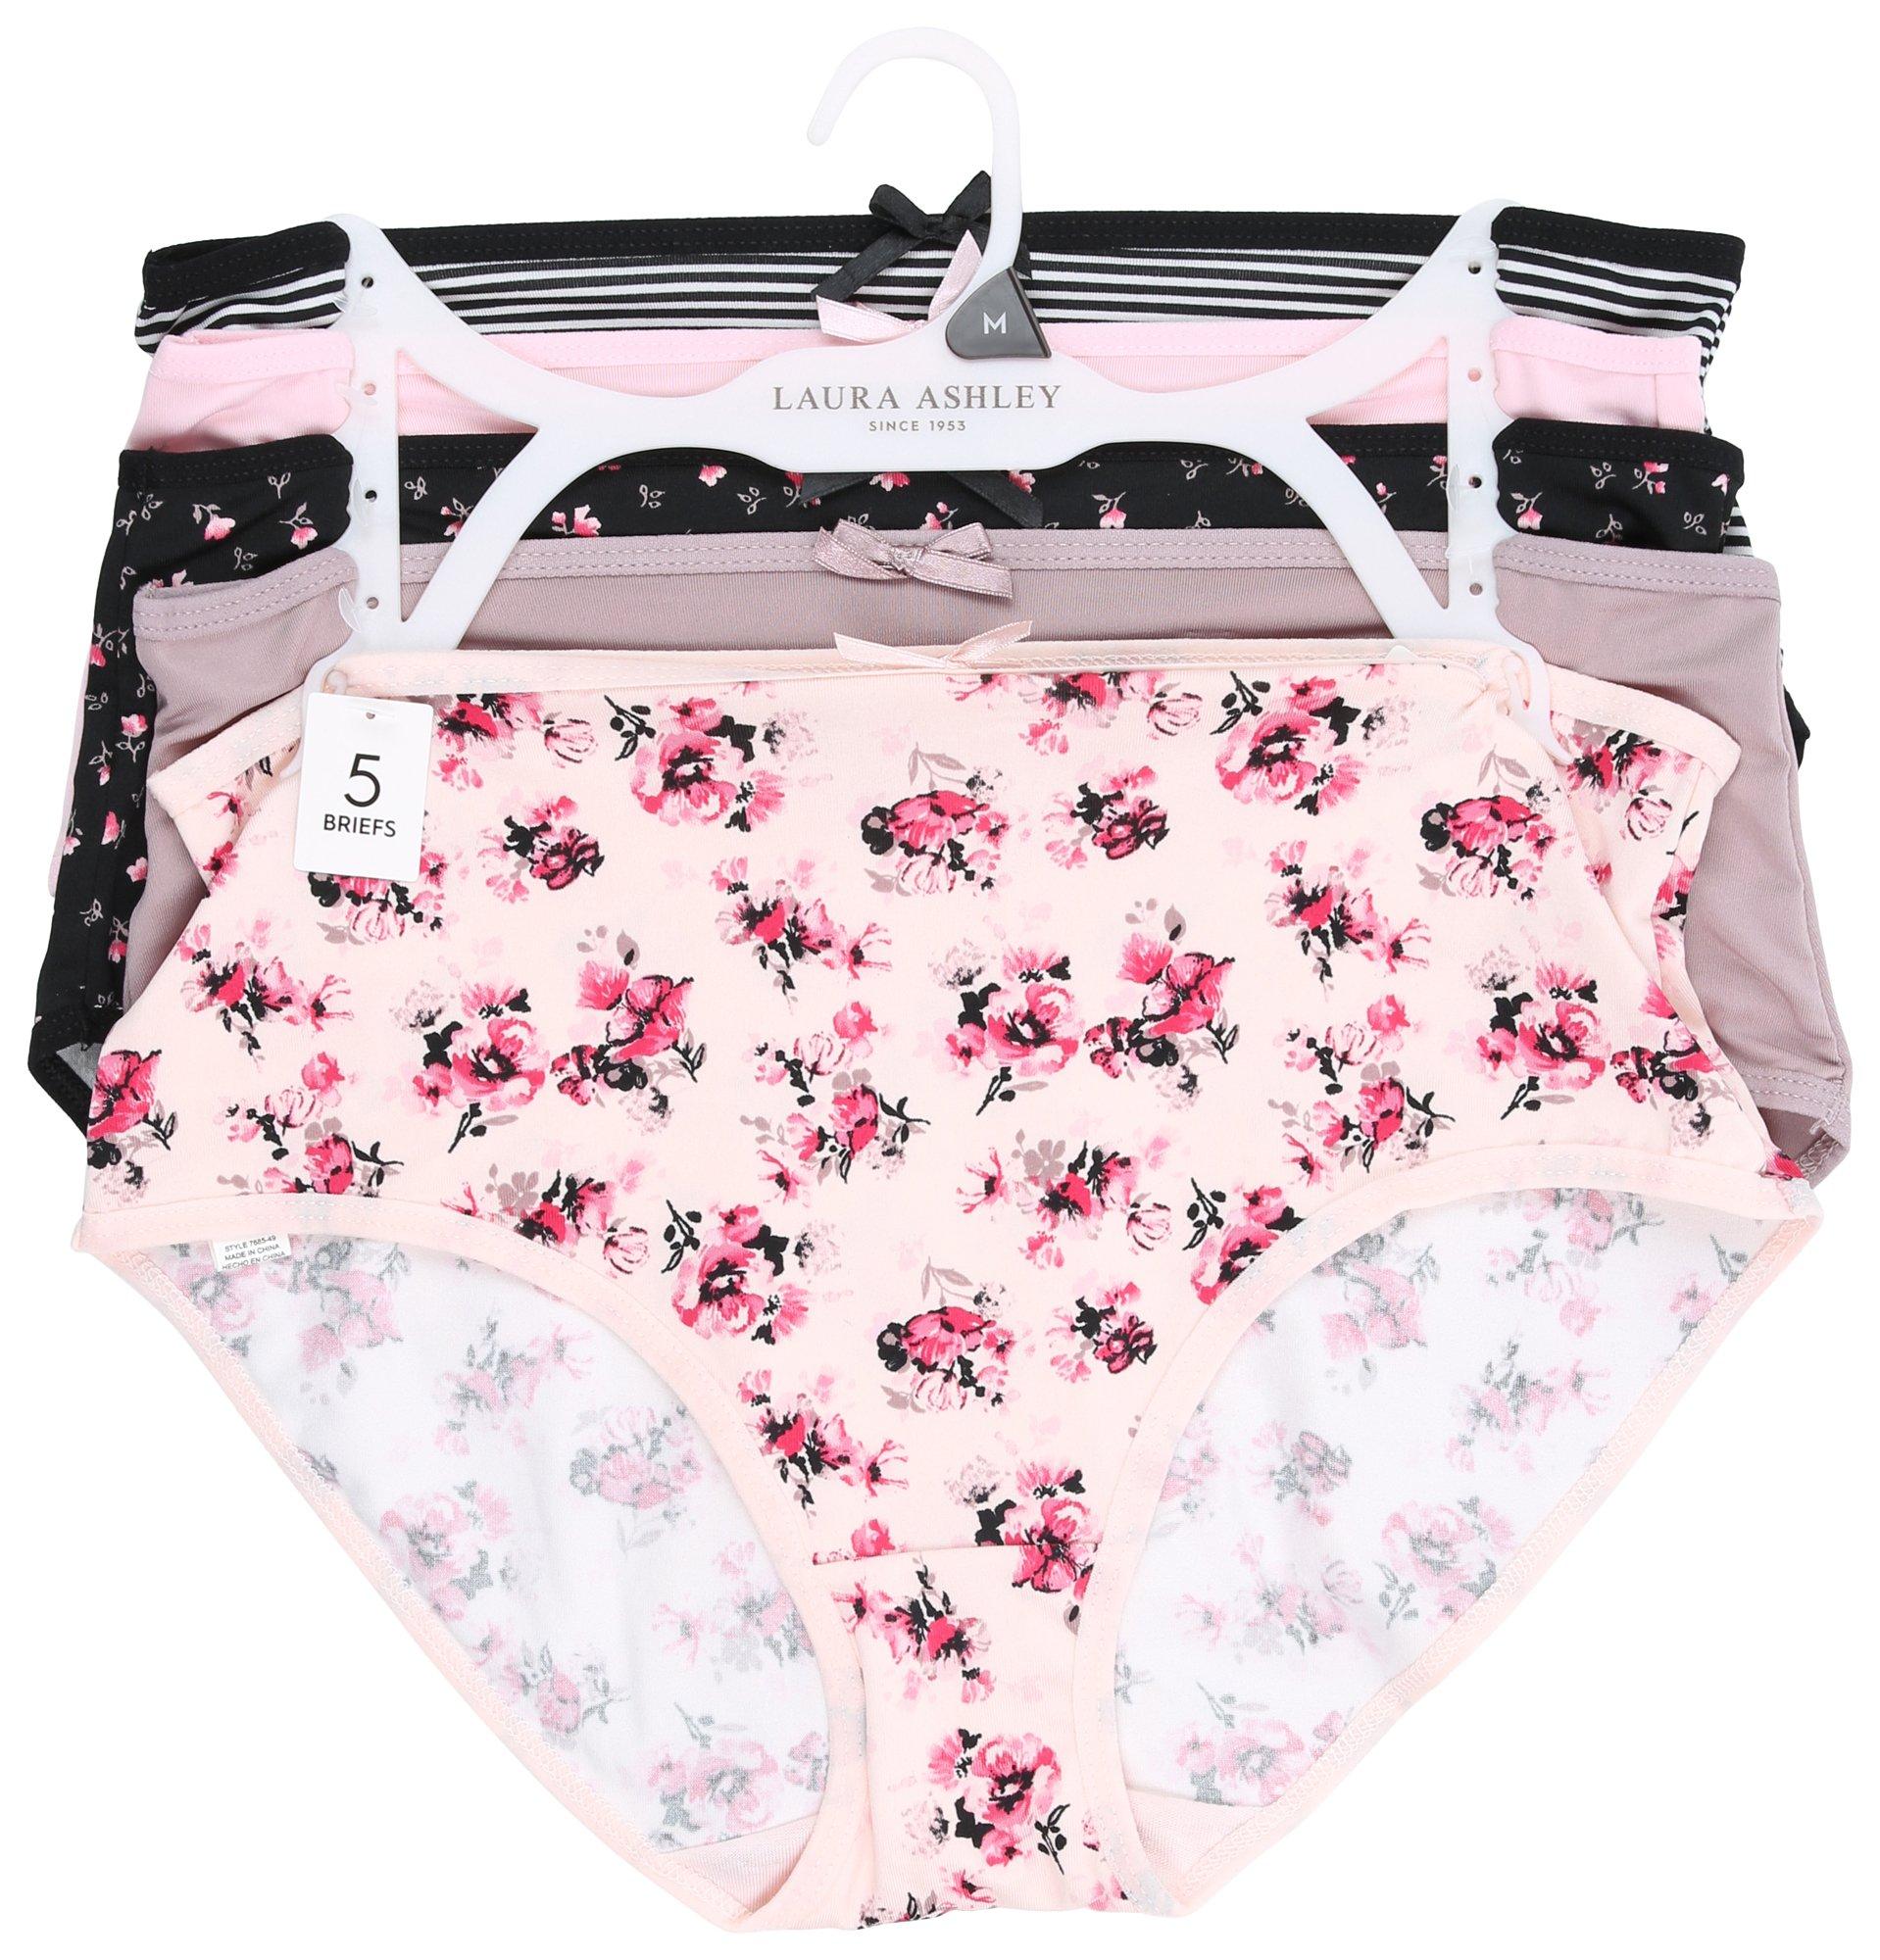 Laura Ashley Girls Underwear Size 3T Panties Bikini Floral Flowers